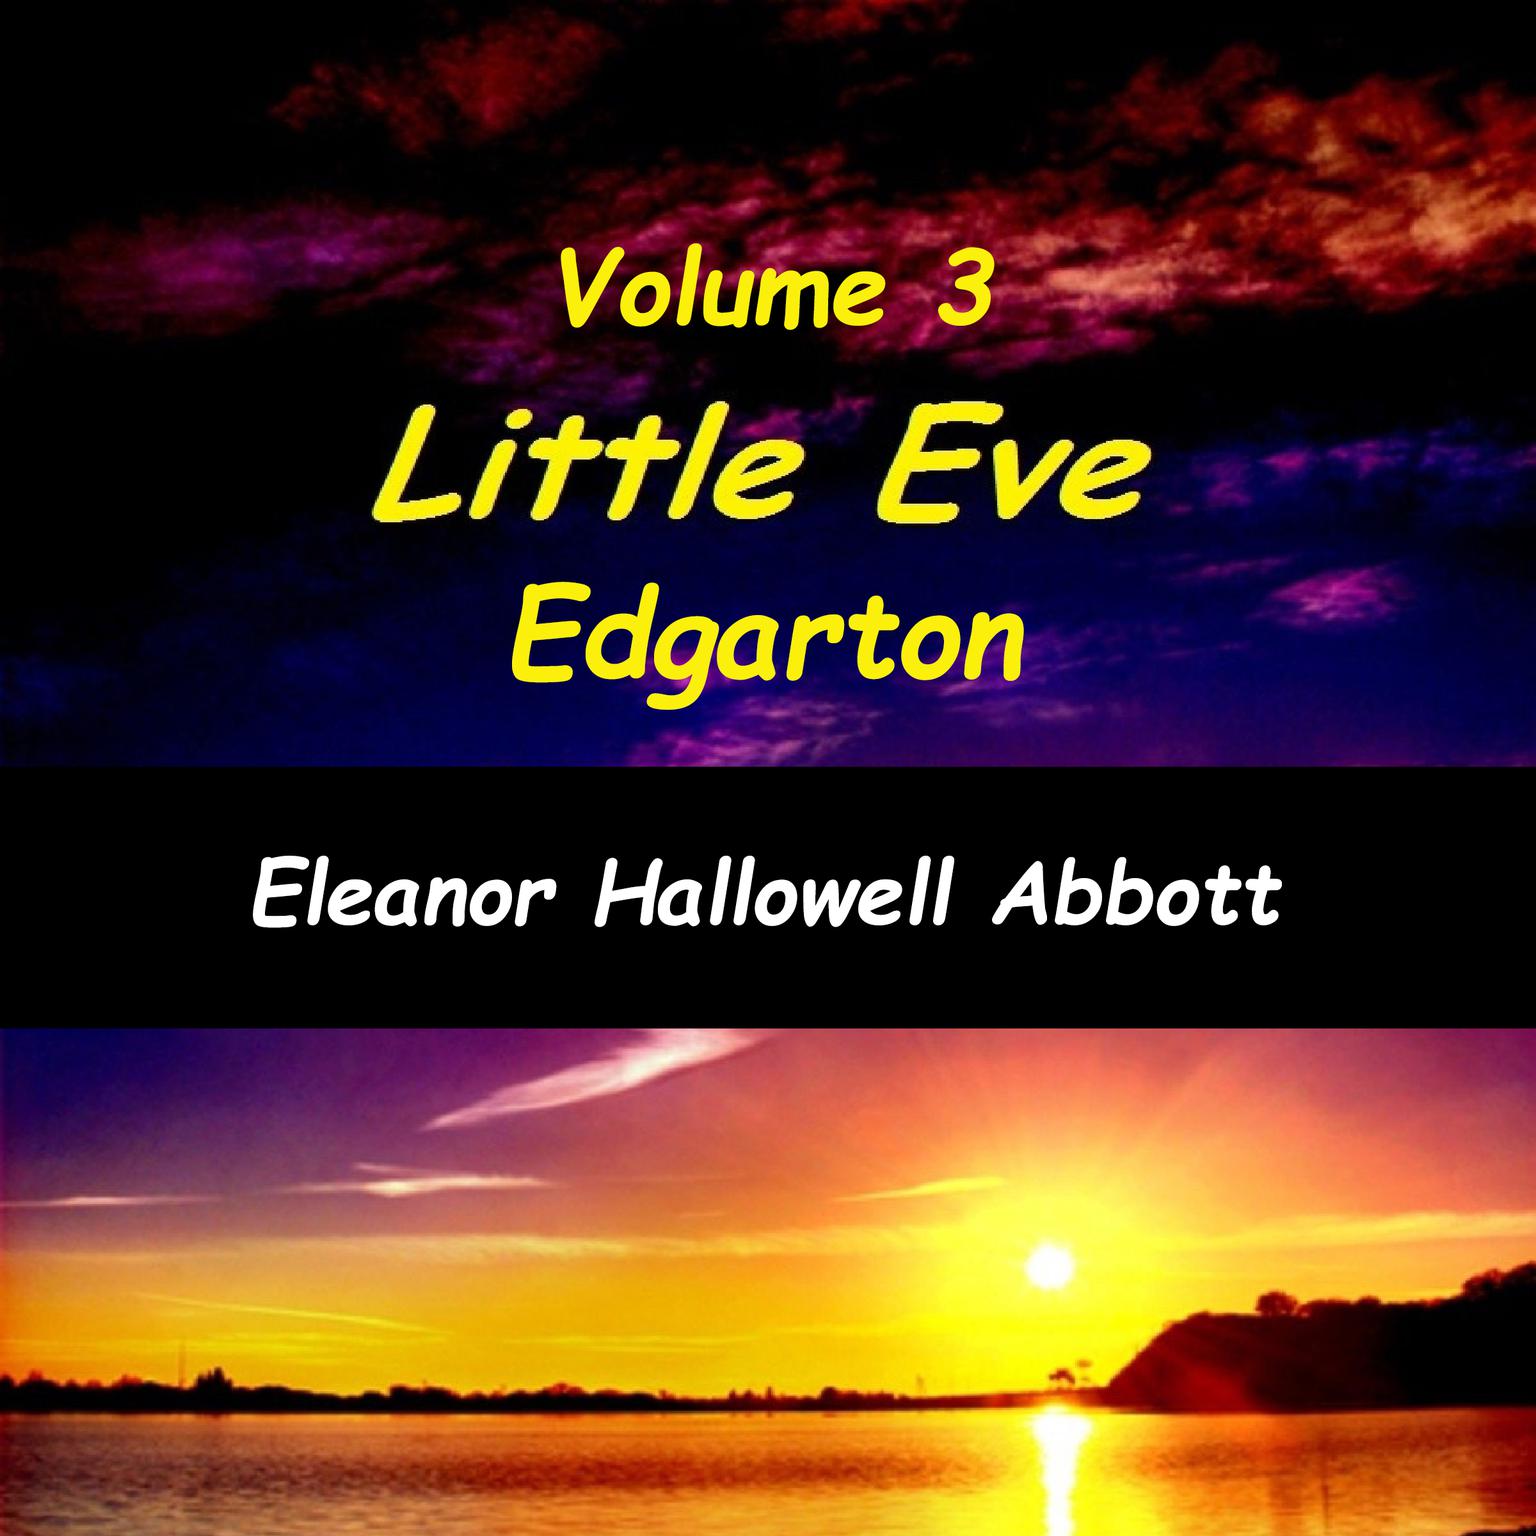 Little Eve Edgarton Volume 3 (Abridged) Audiobook, by Eleanor Hallowell Abbott